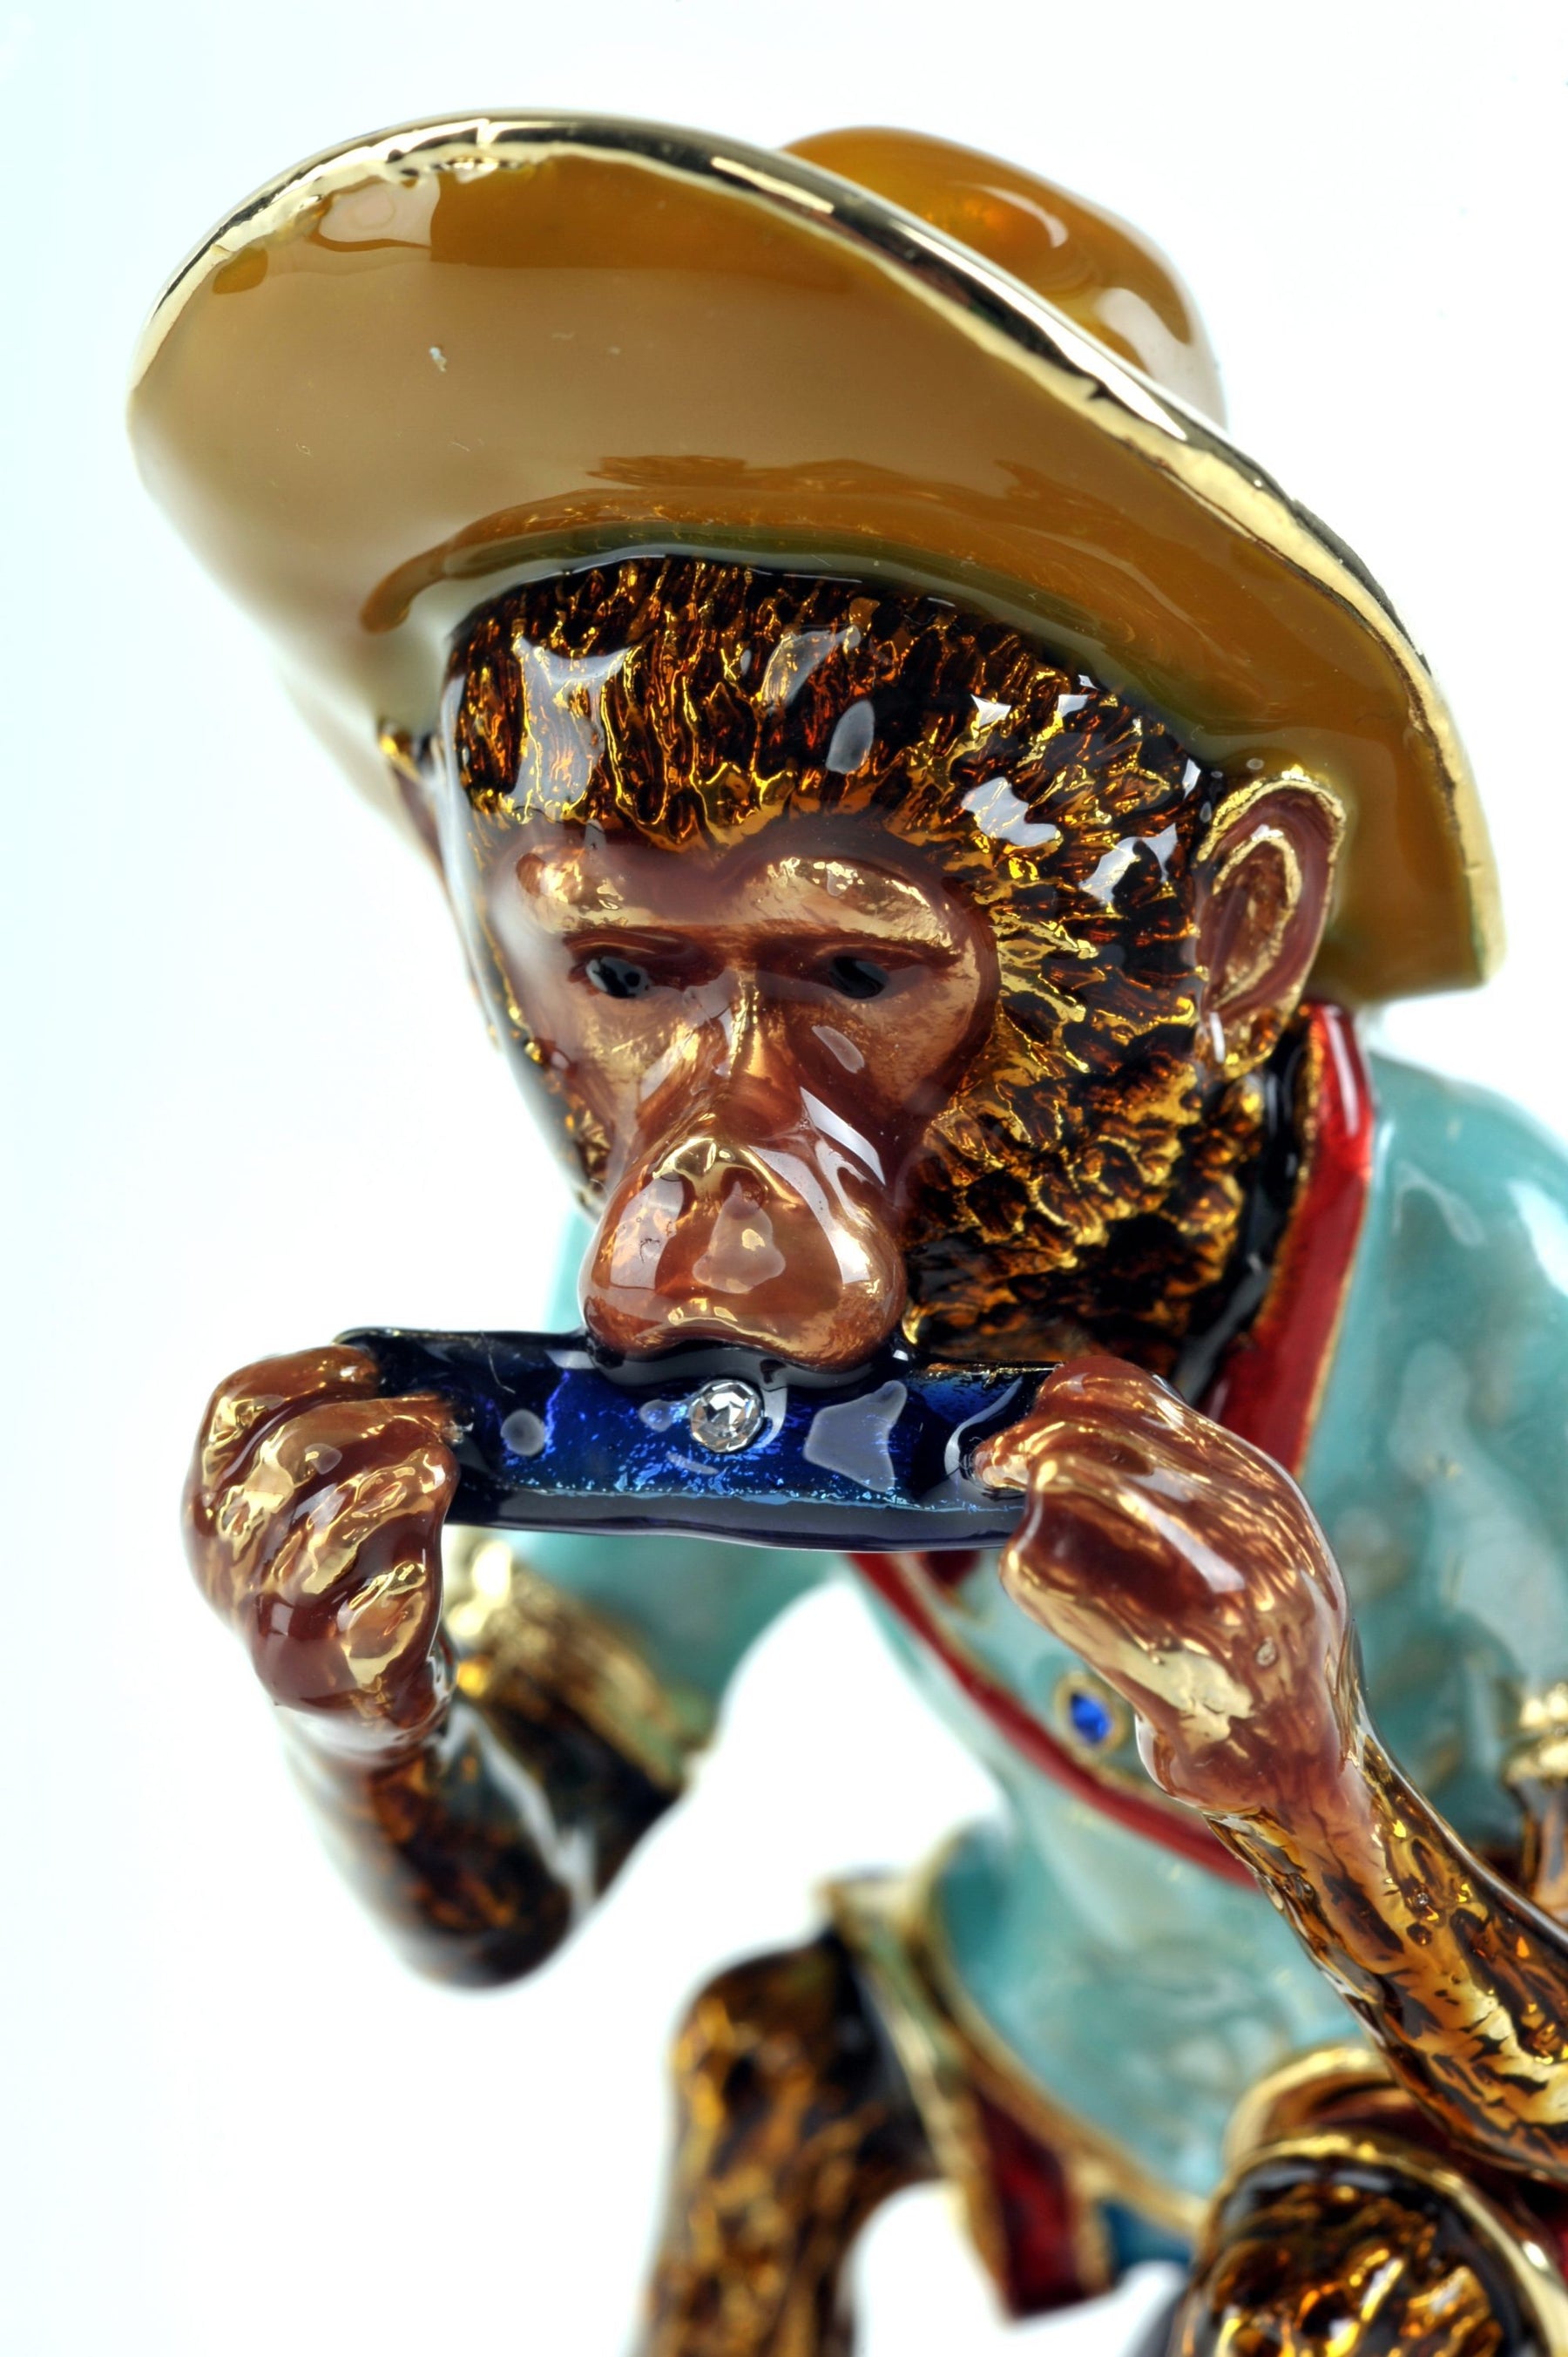 Keren Kopal Monkey Playing the Harmonica  55.50